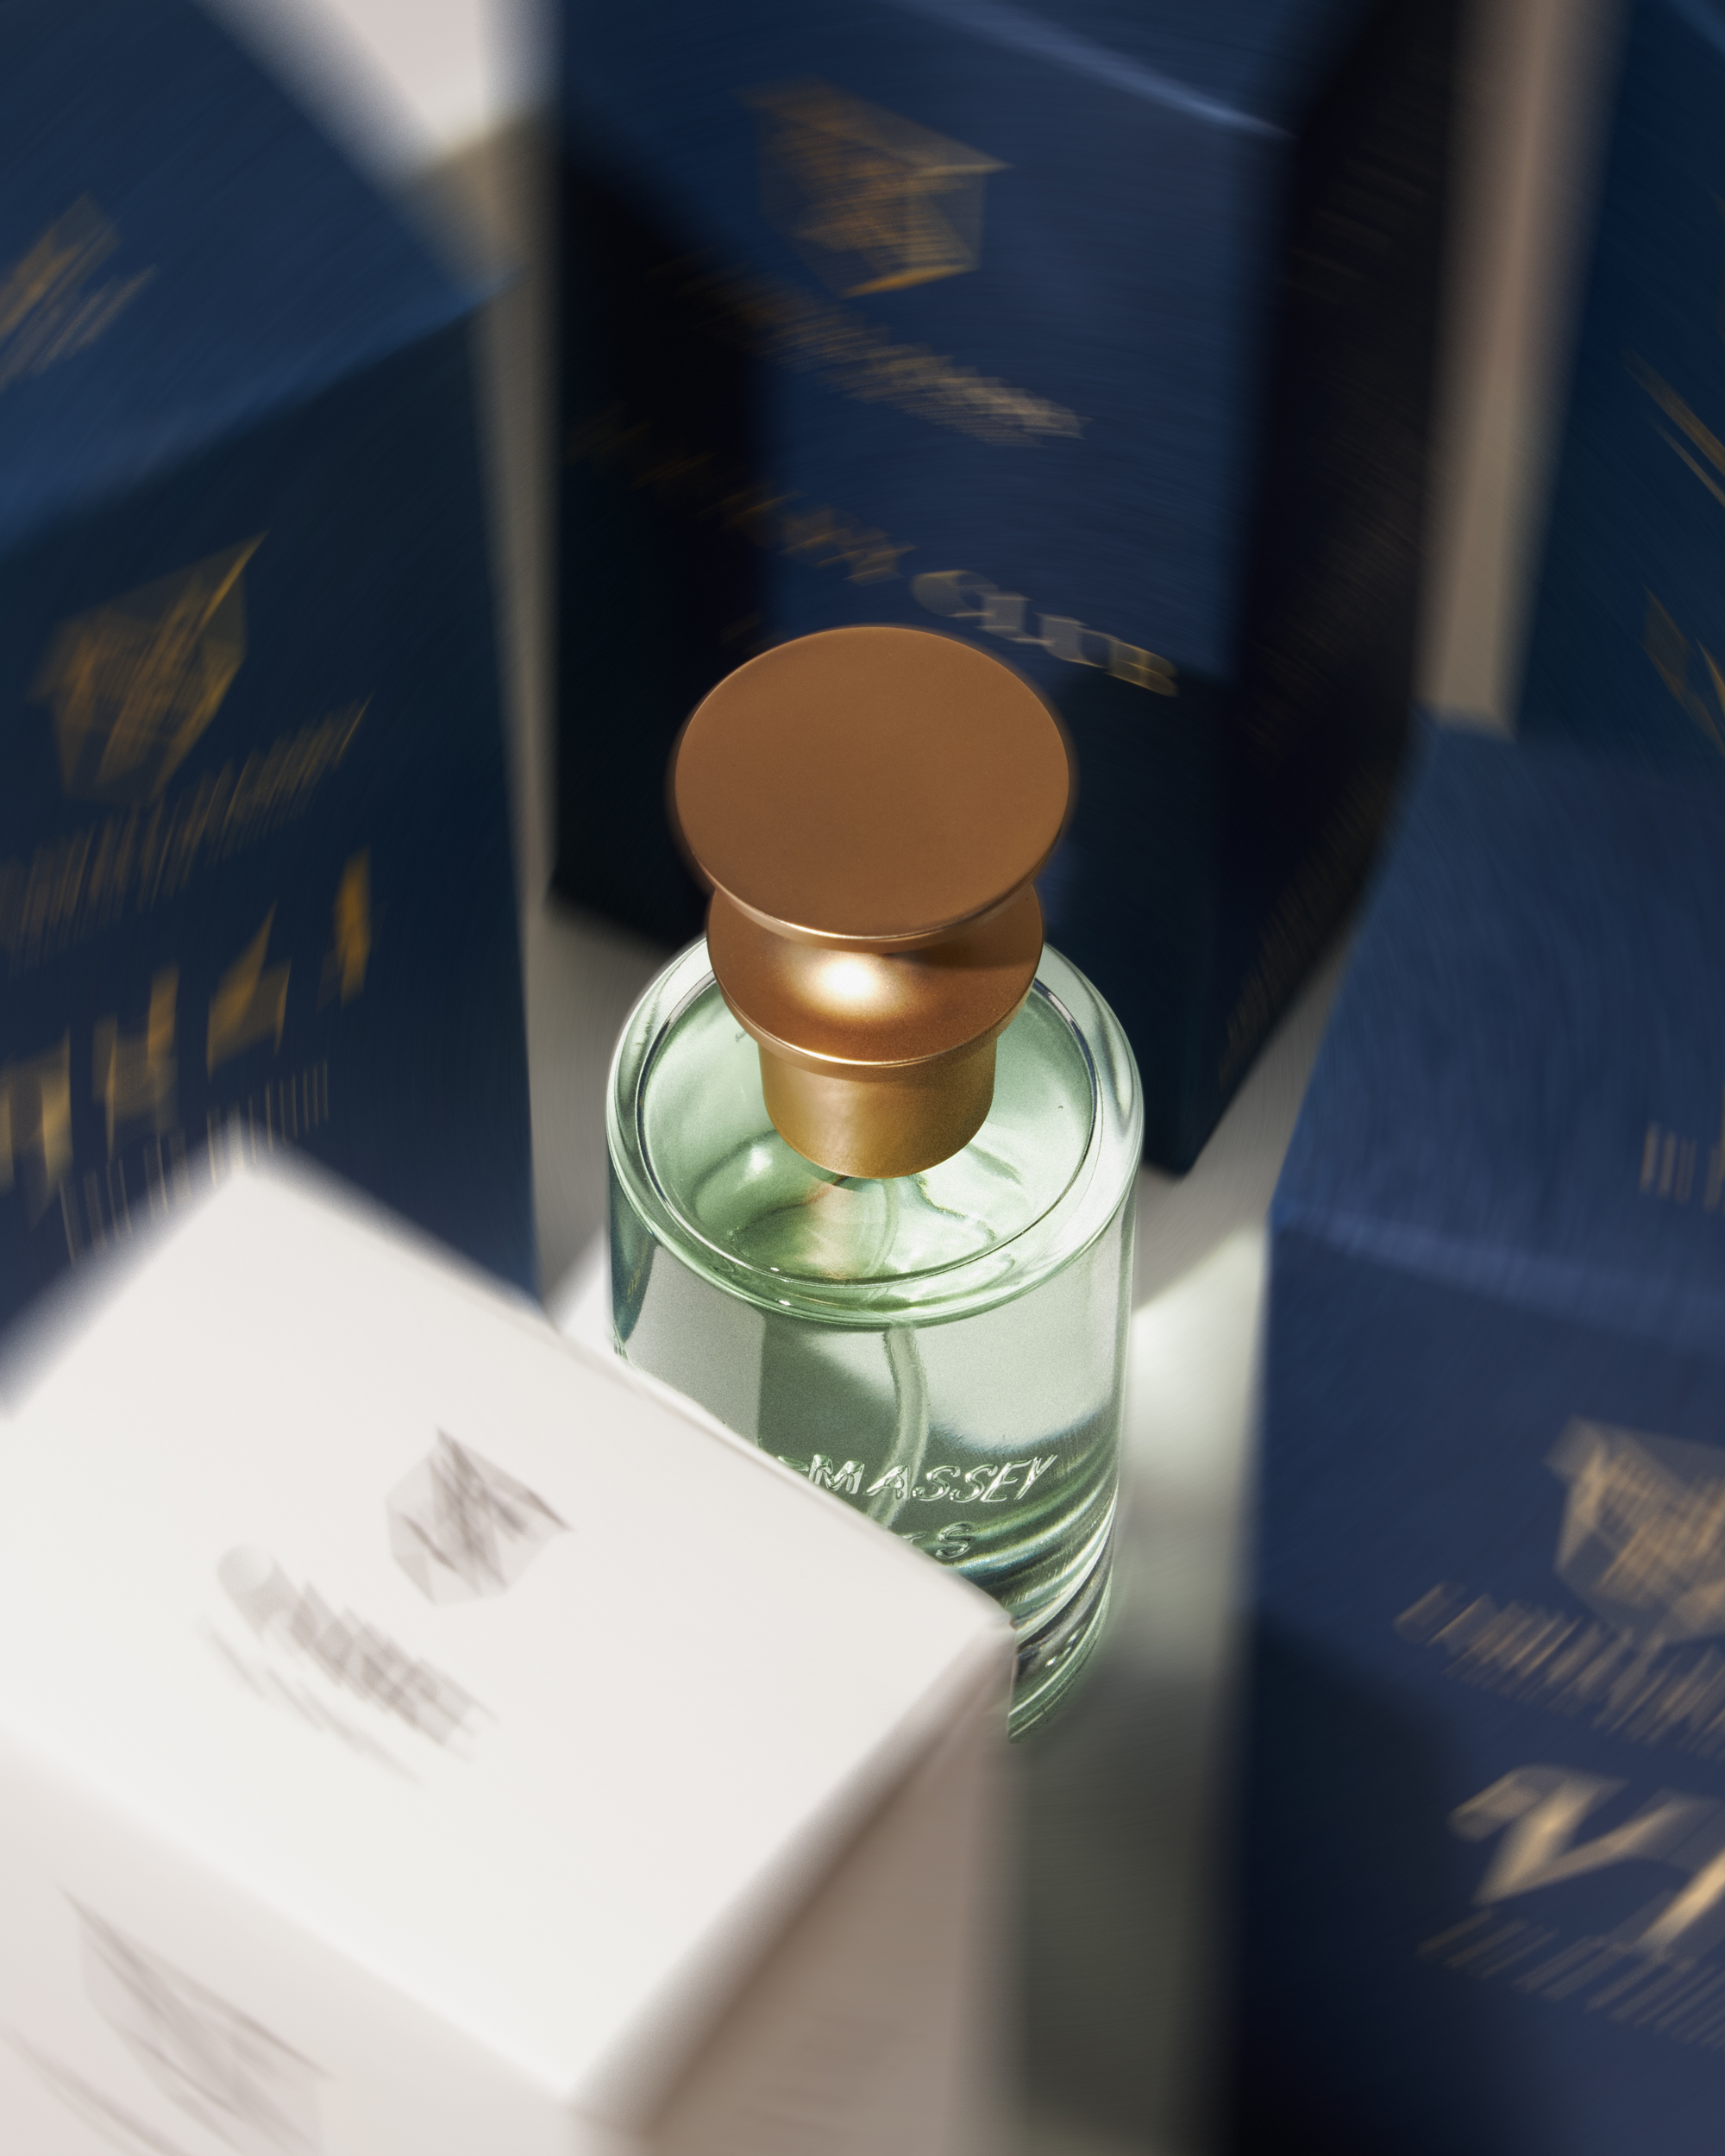 Caswell-Massey Men's Fragrance, Bottle of Caswell-Massey Jockey Club Eau de Parfum shown with outer packaging